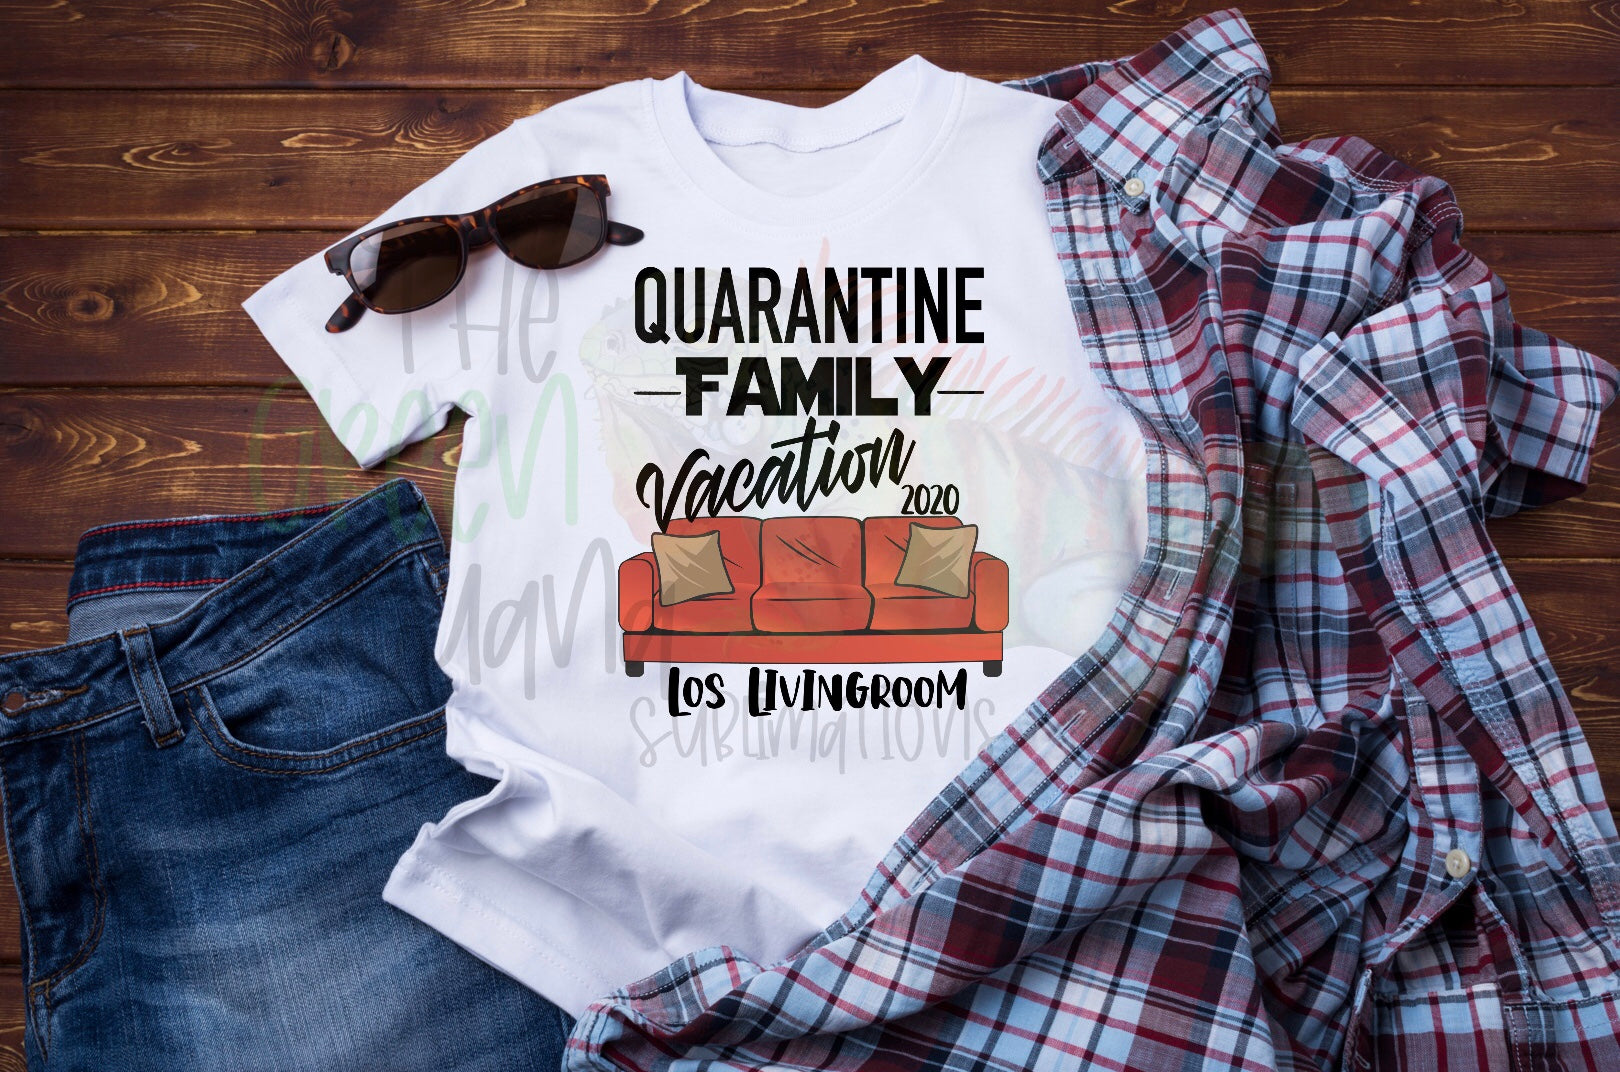 Quarantine Family Vacation - 2020 Los Livingroom